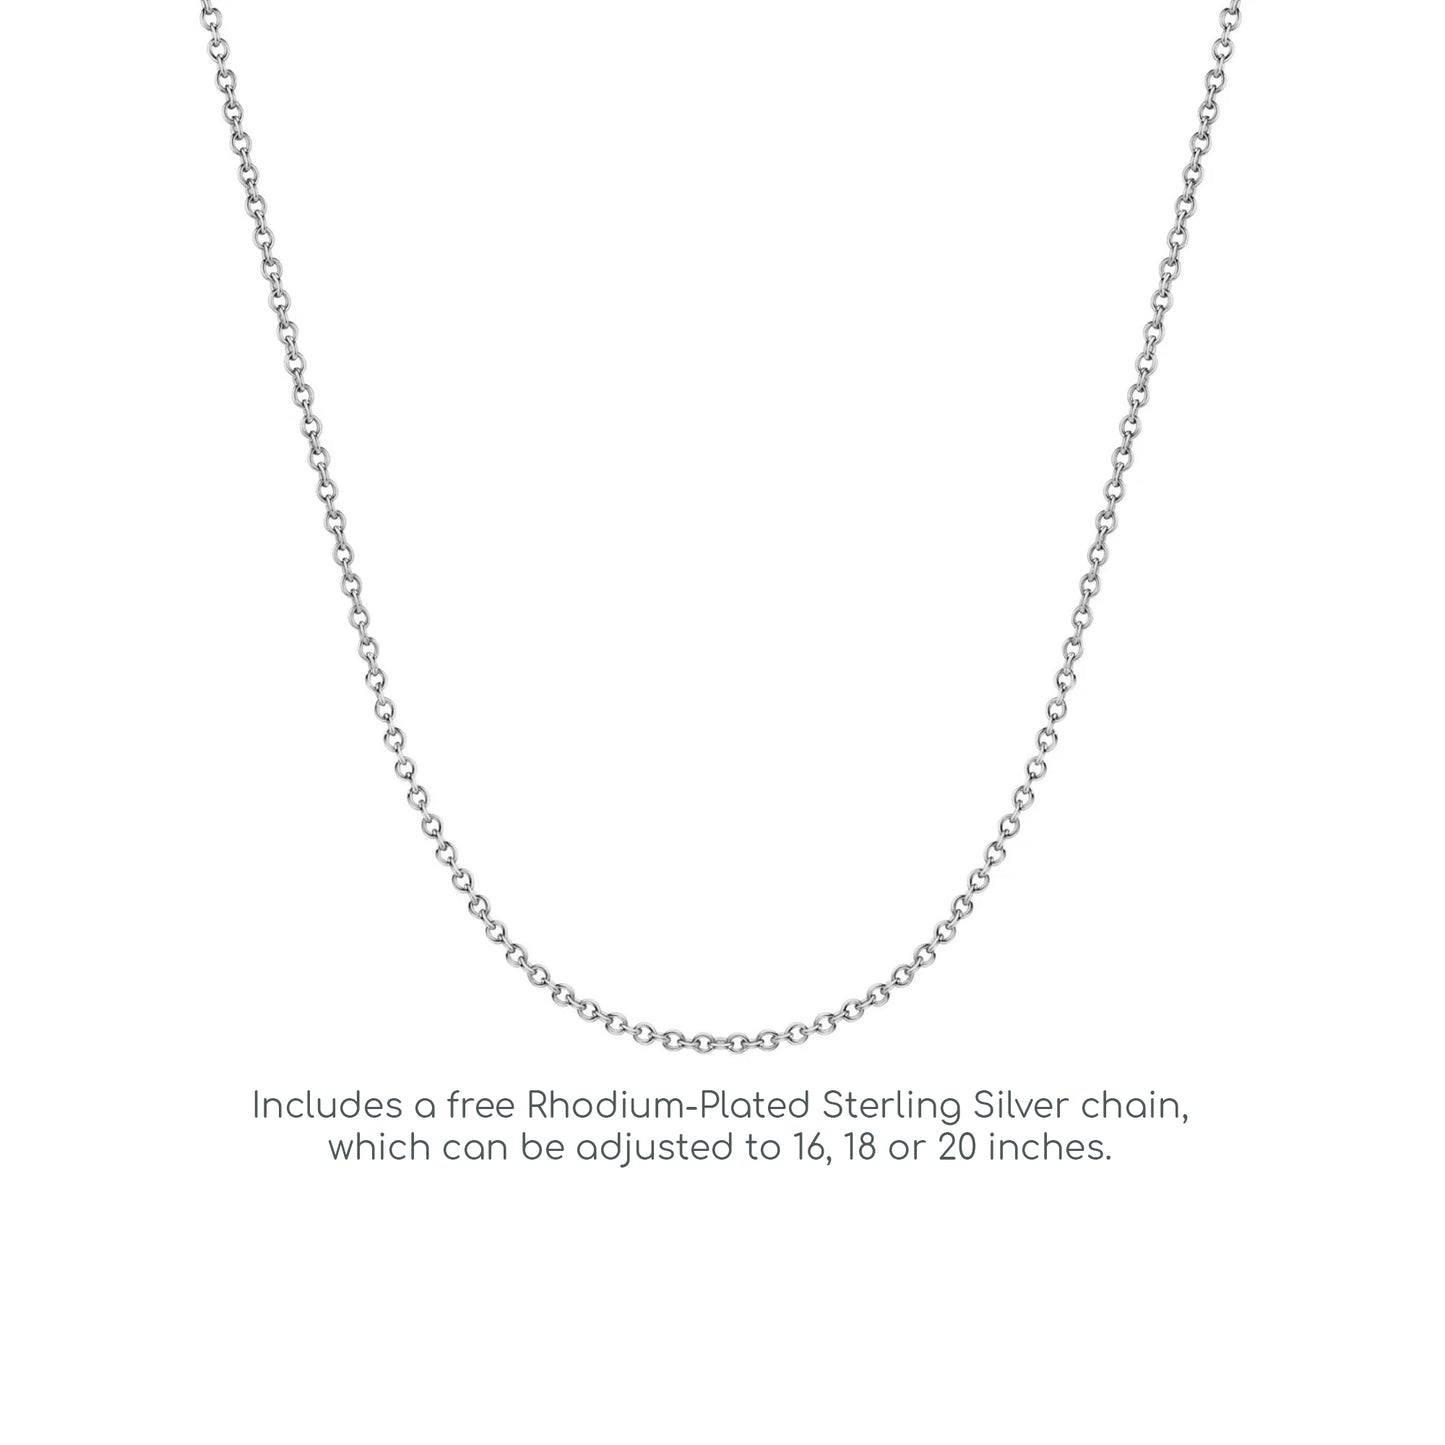 Silver  Triple Tears of Joy Pear Pendant Necklace - GVP652